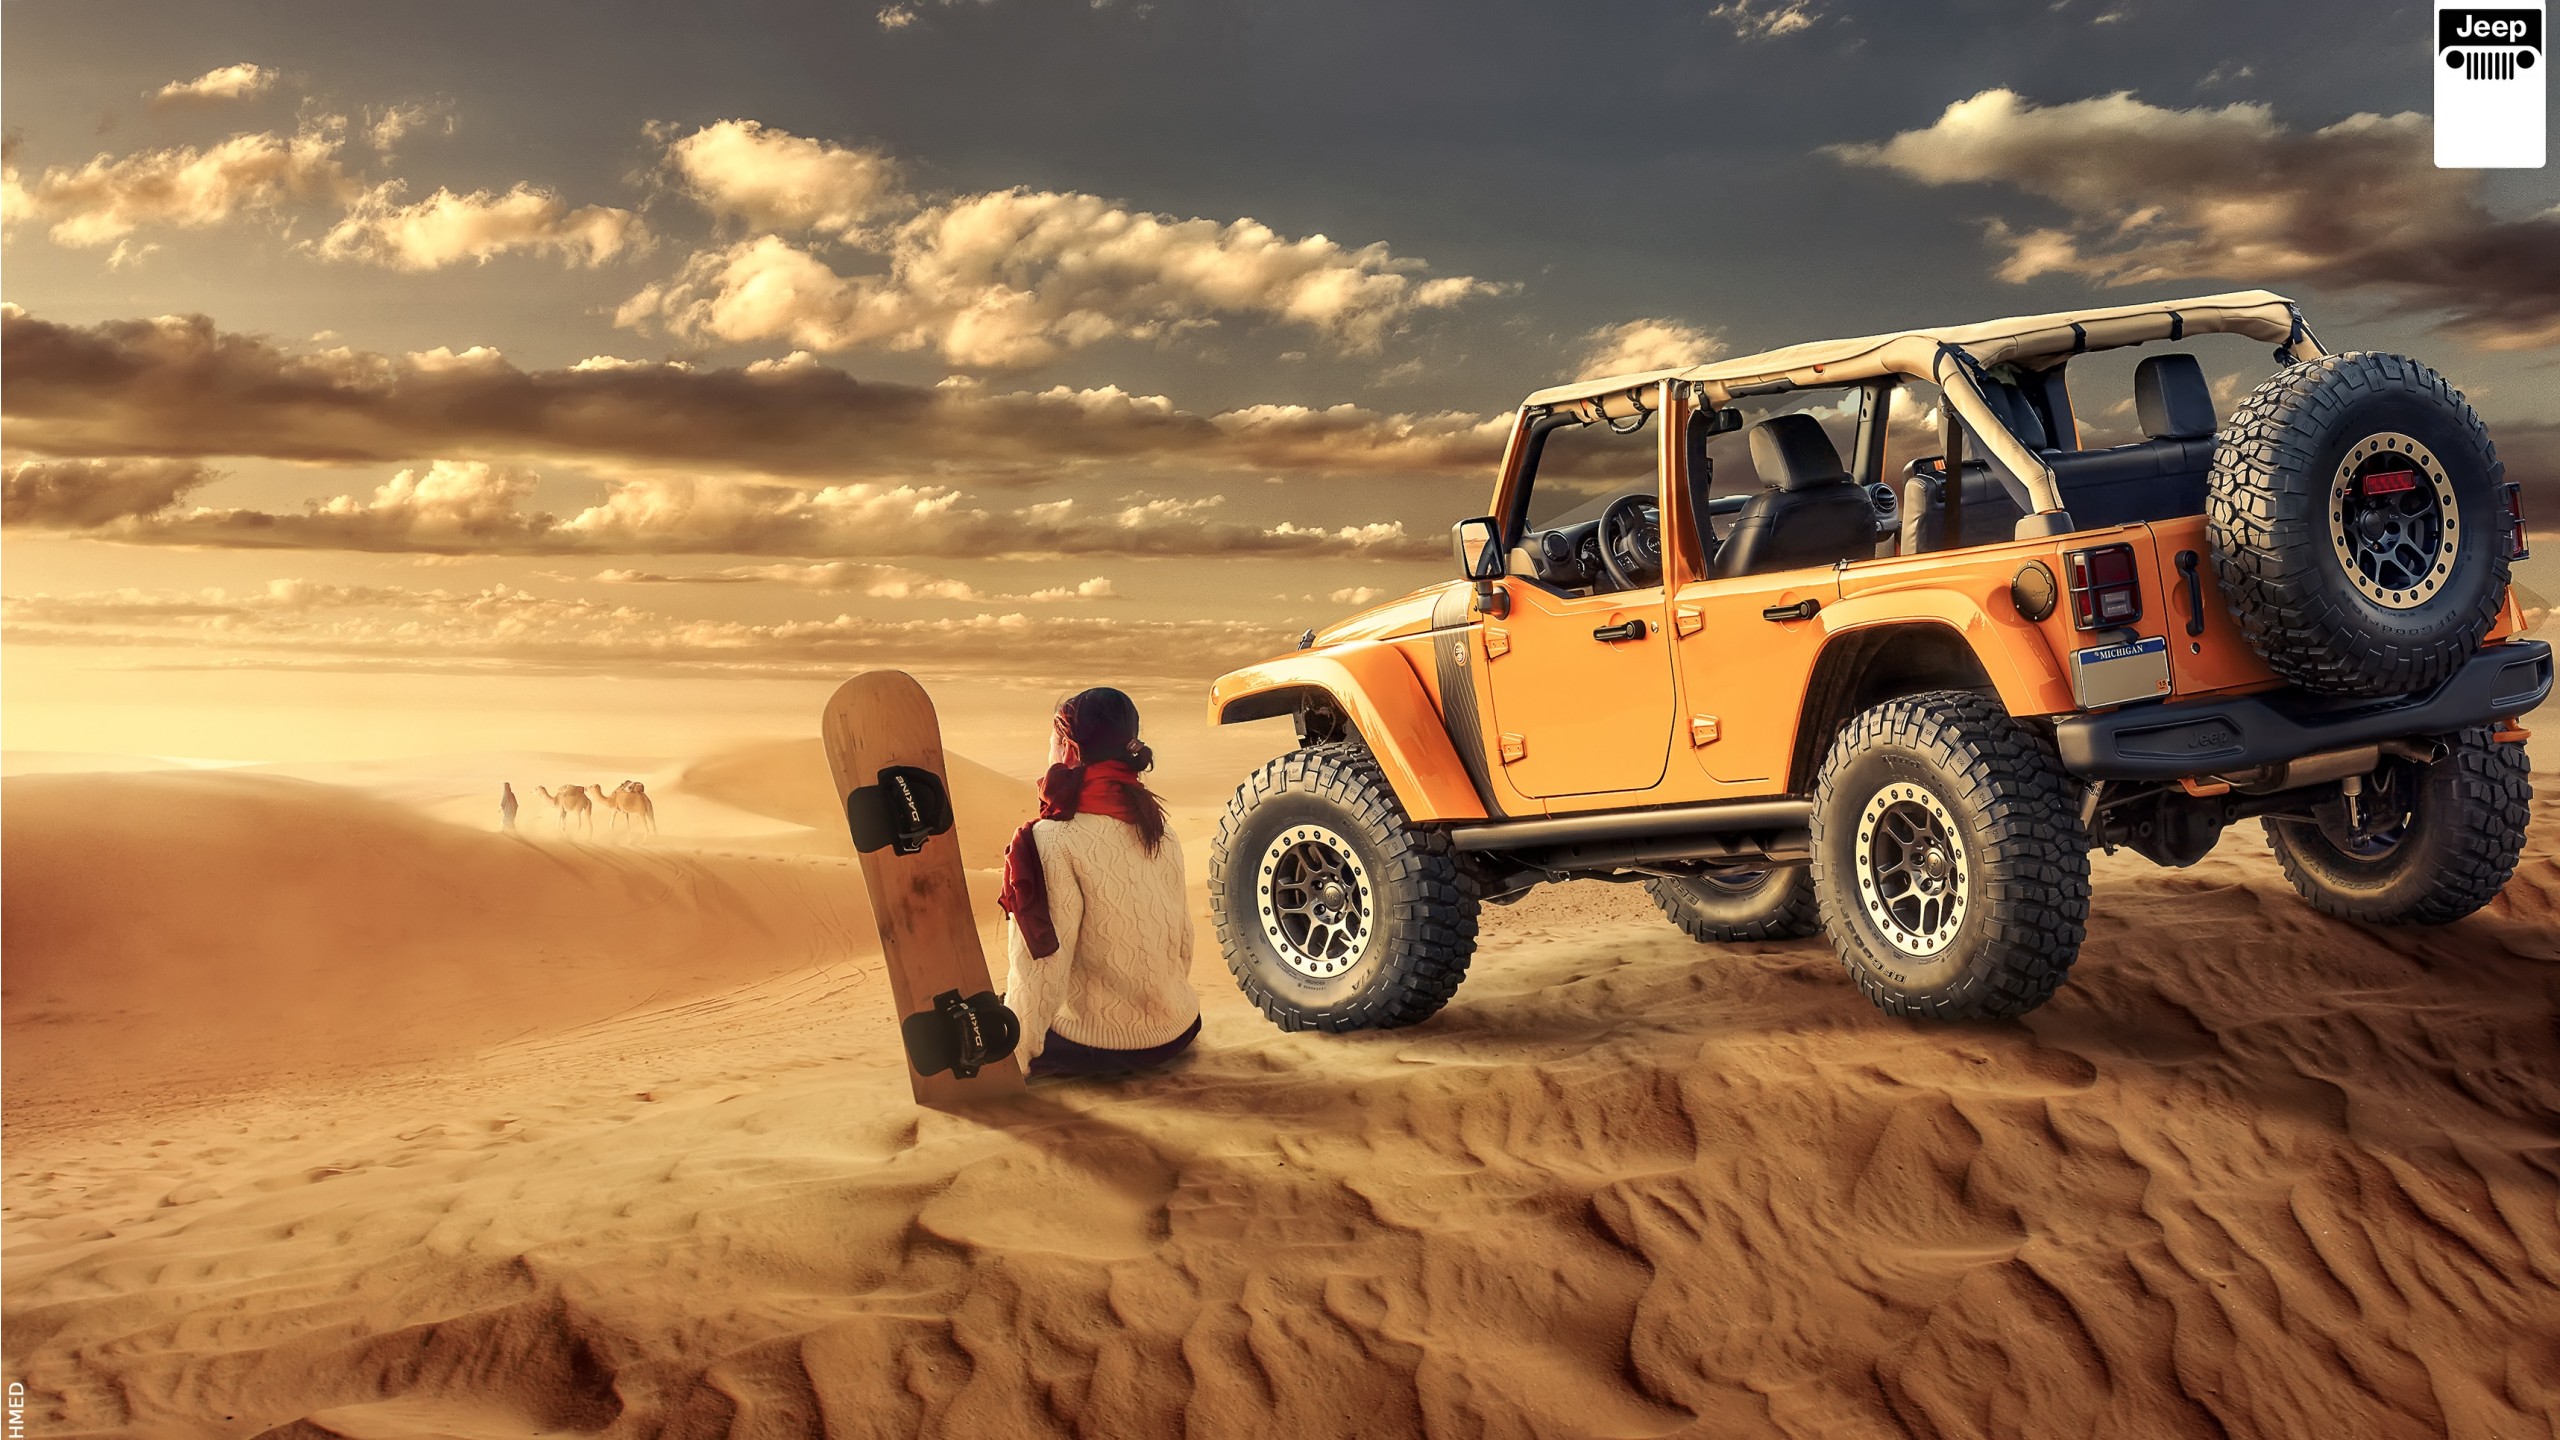 Jeep Wrangler Desert Off road Wallpaper | HD Car Wallpapers | ID #8039